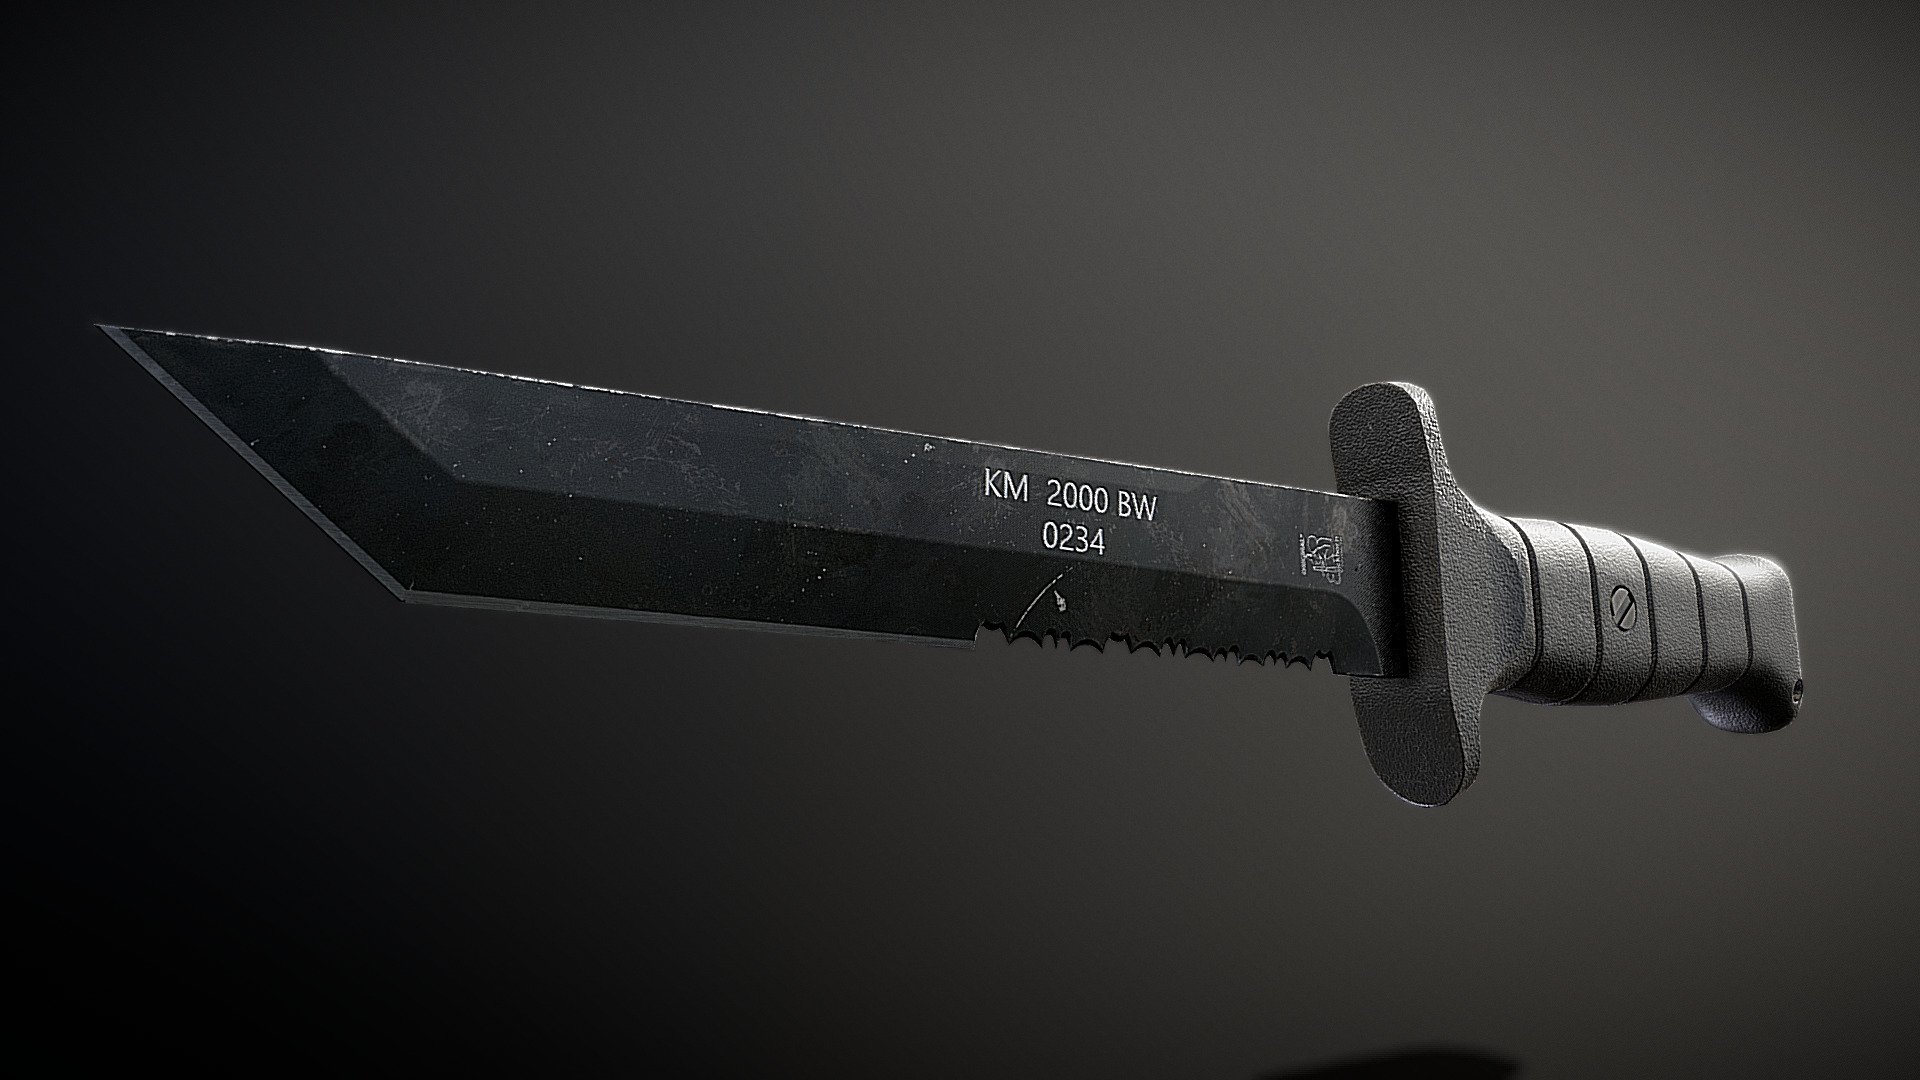 The KM2000 (KM designates Kampfmesser, literally &ldquo;combat knife